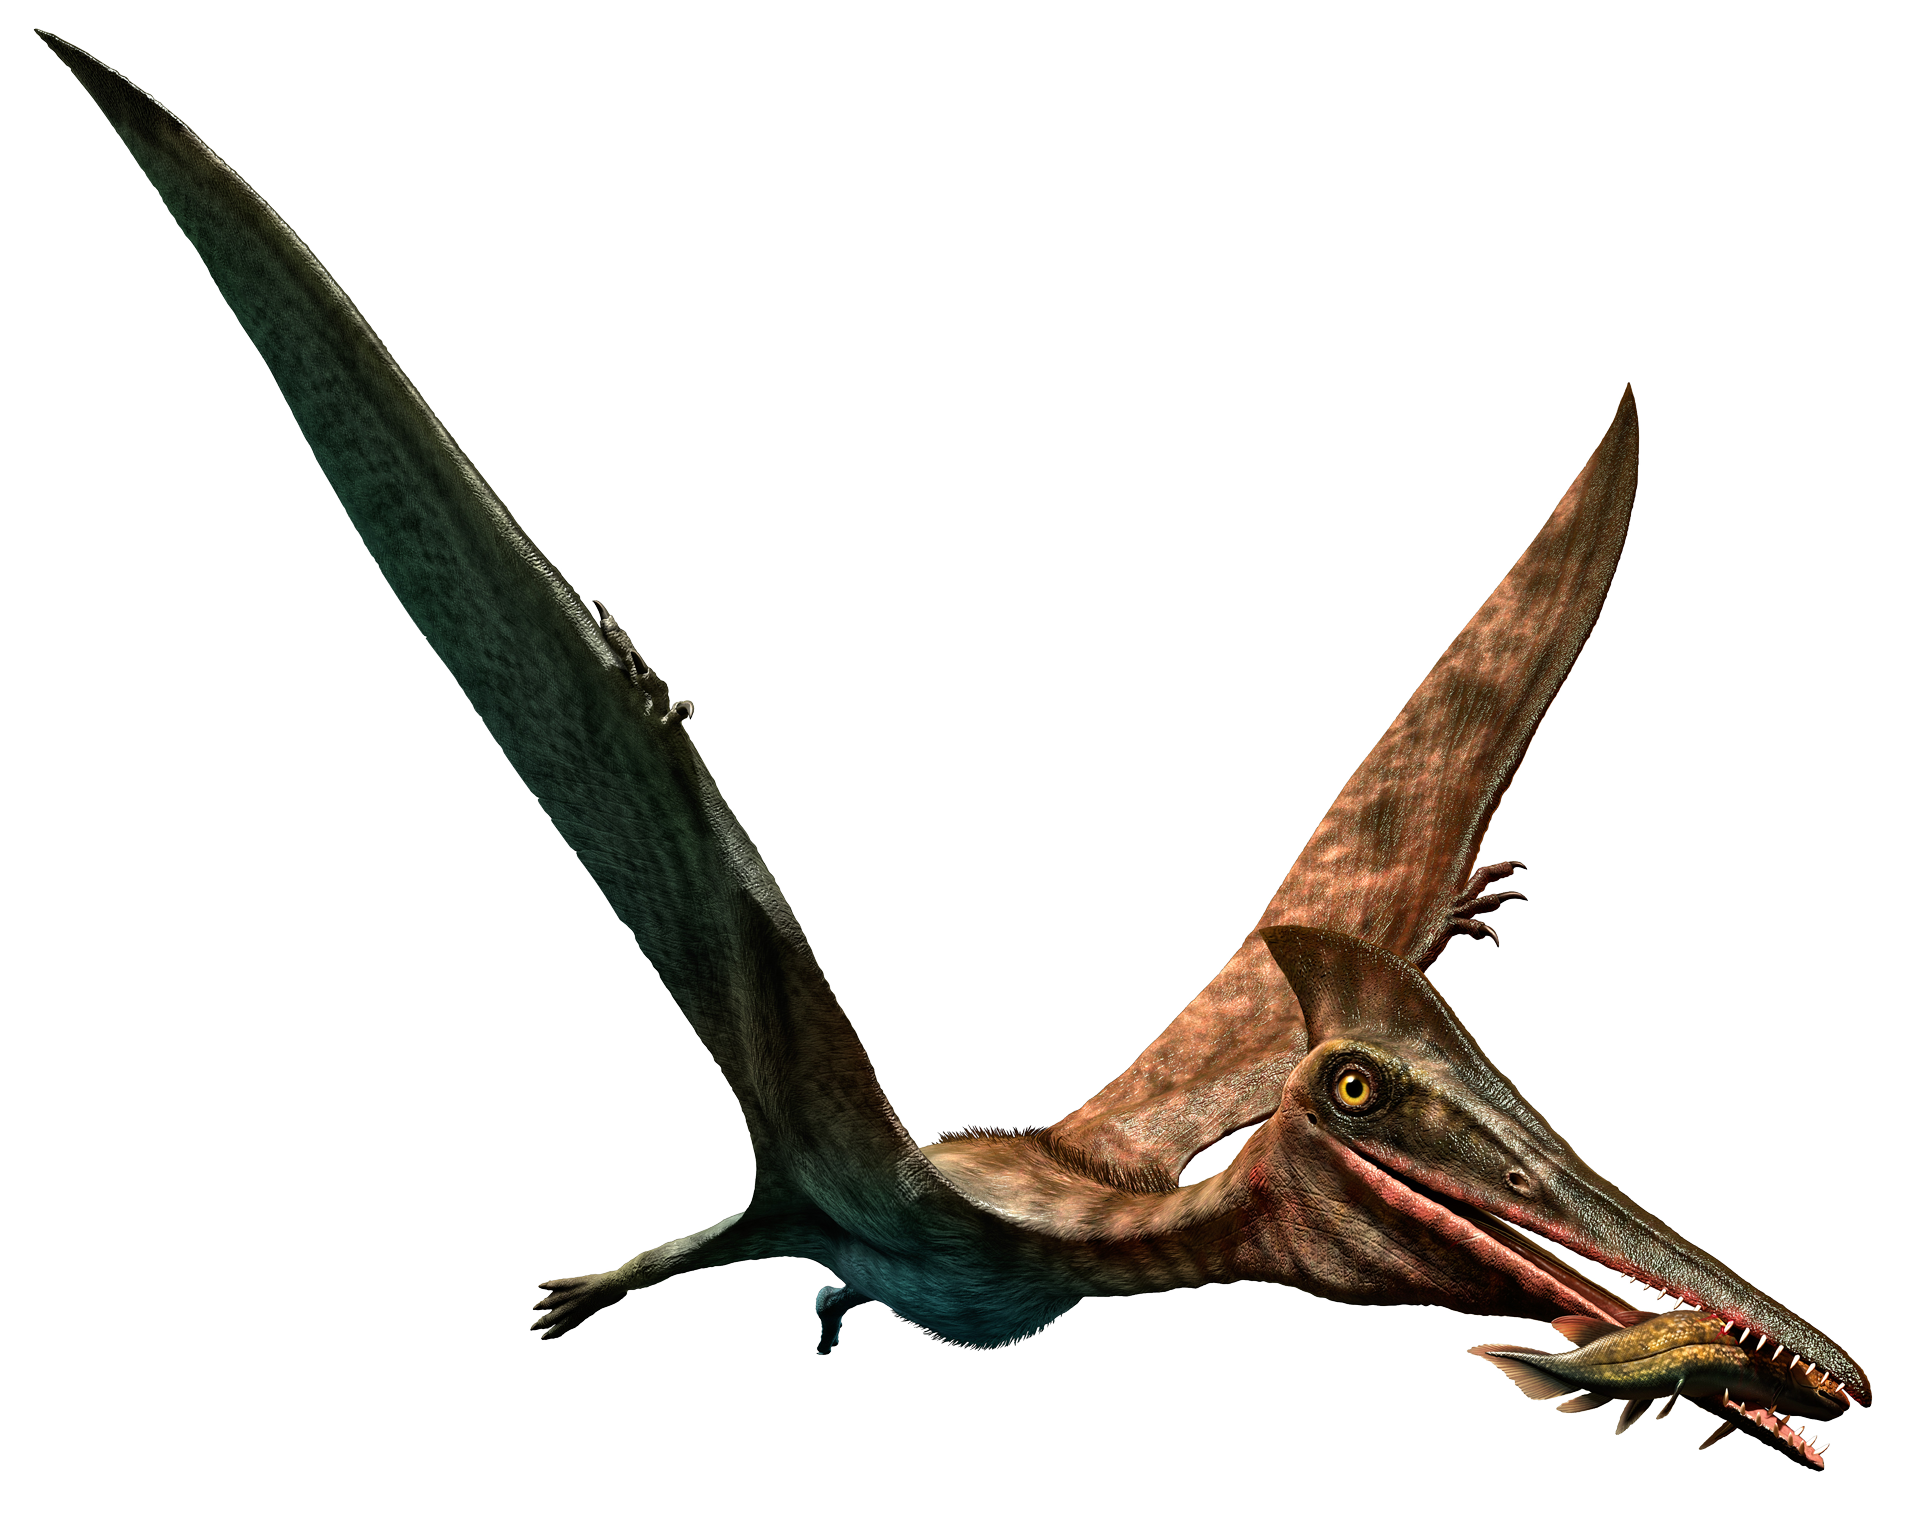 Cearadactylus